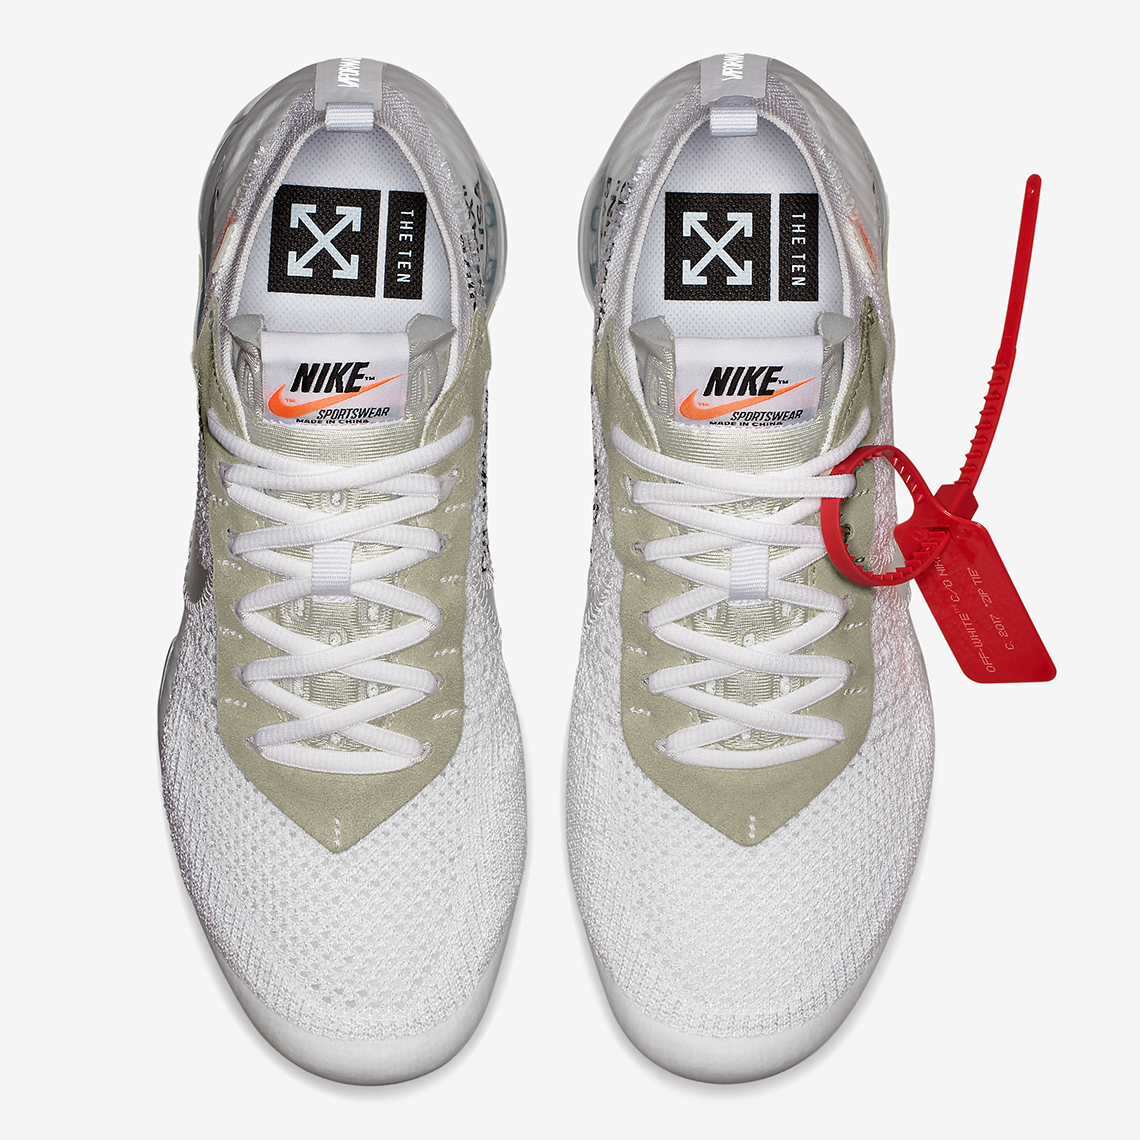 Off-White x Nike Vapormax White Release Info - JustFreshKicks